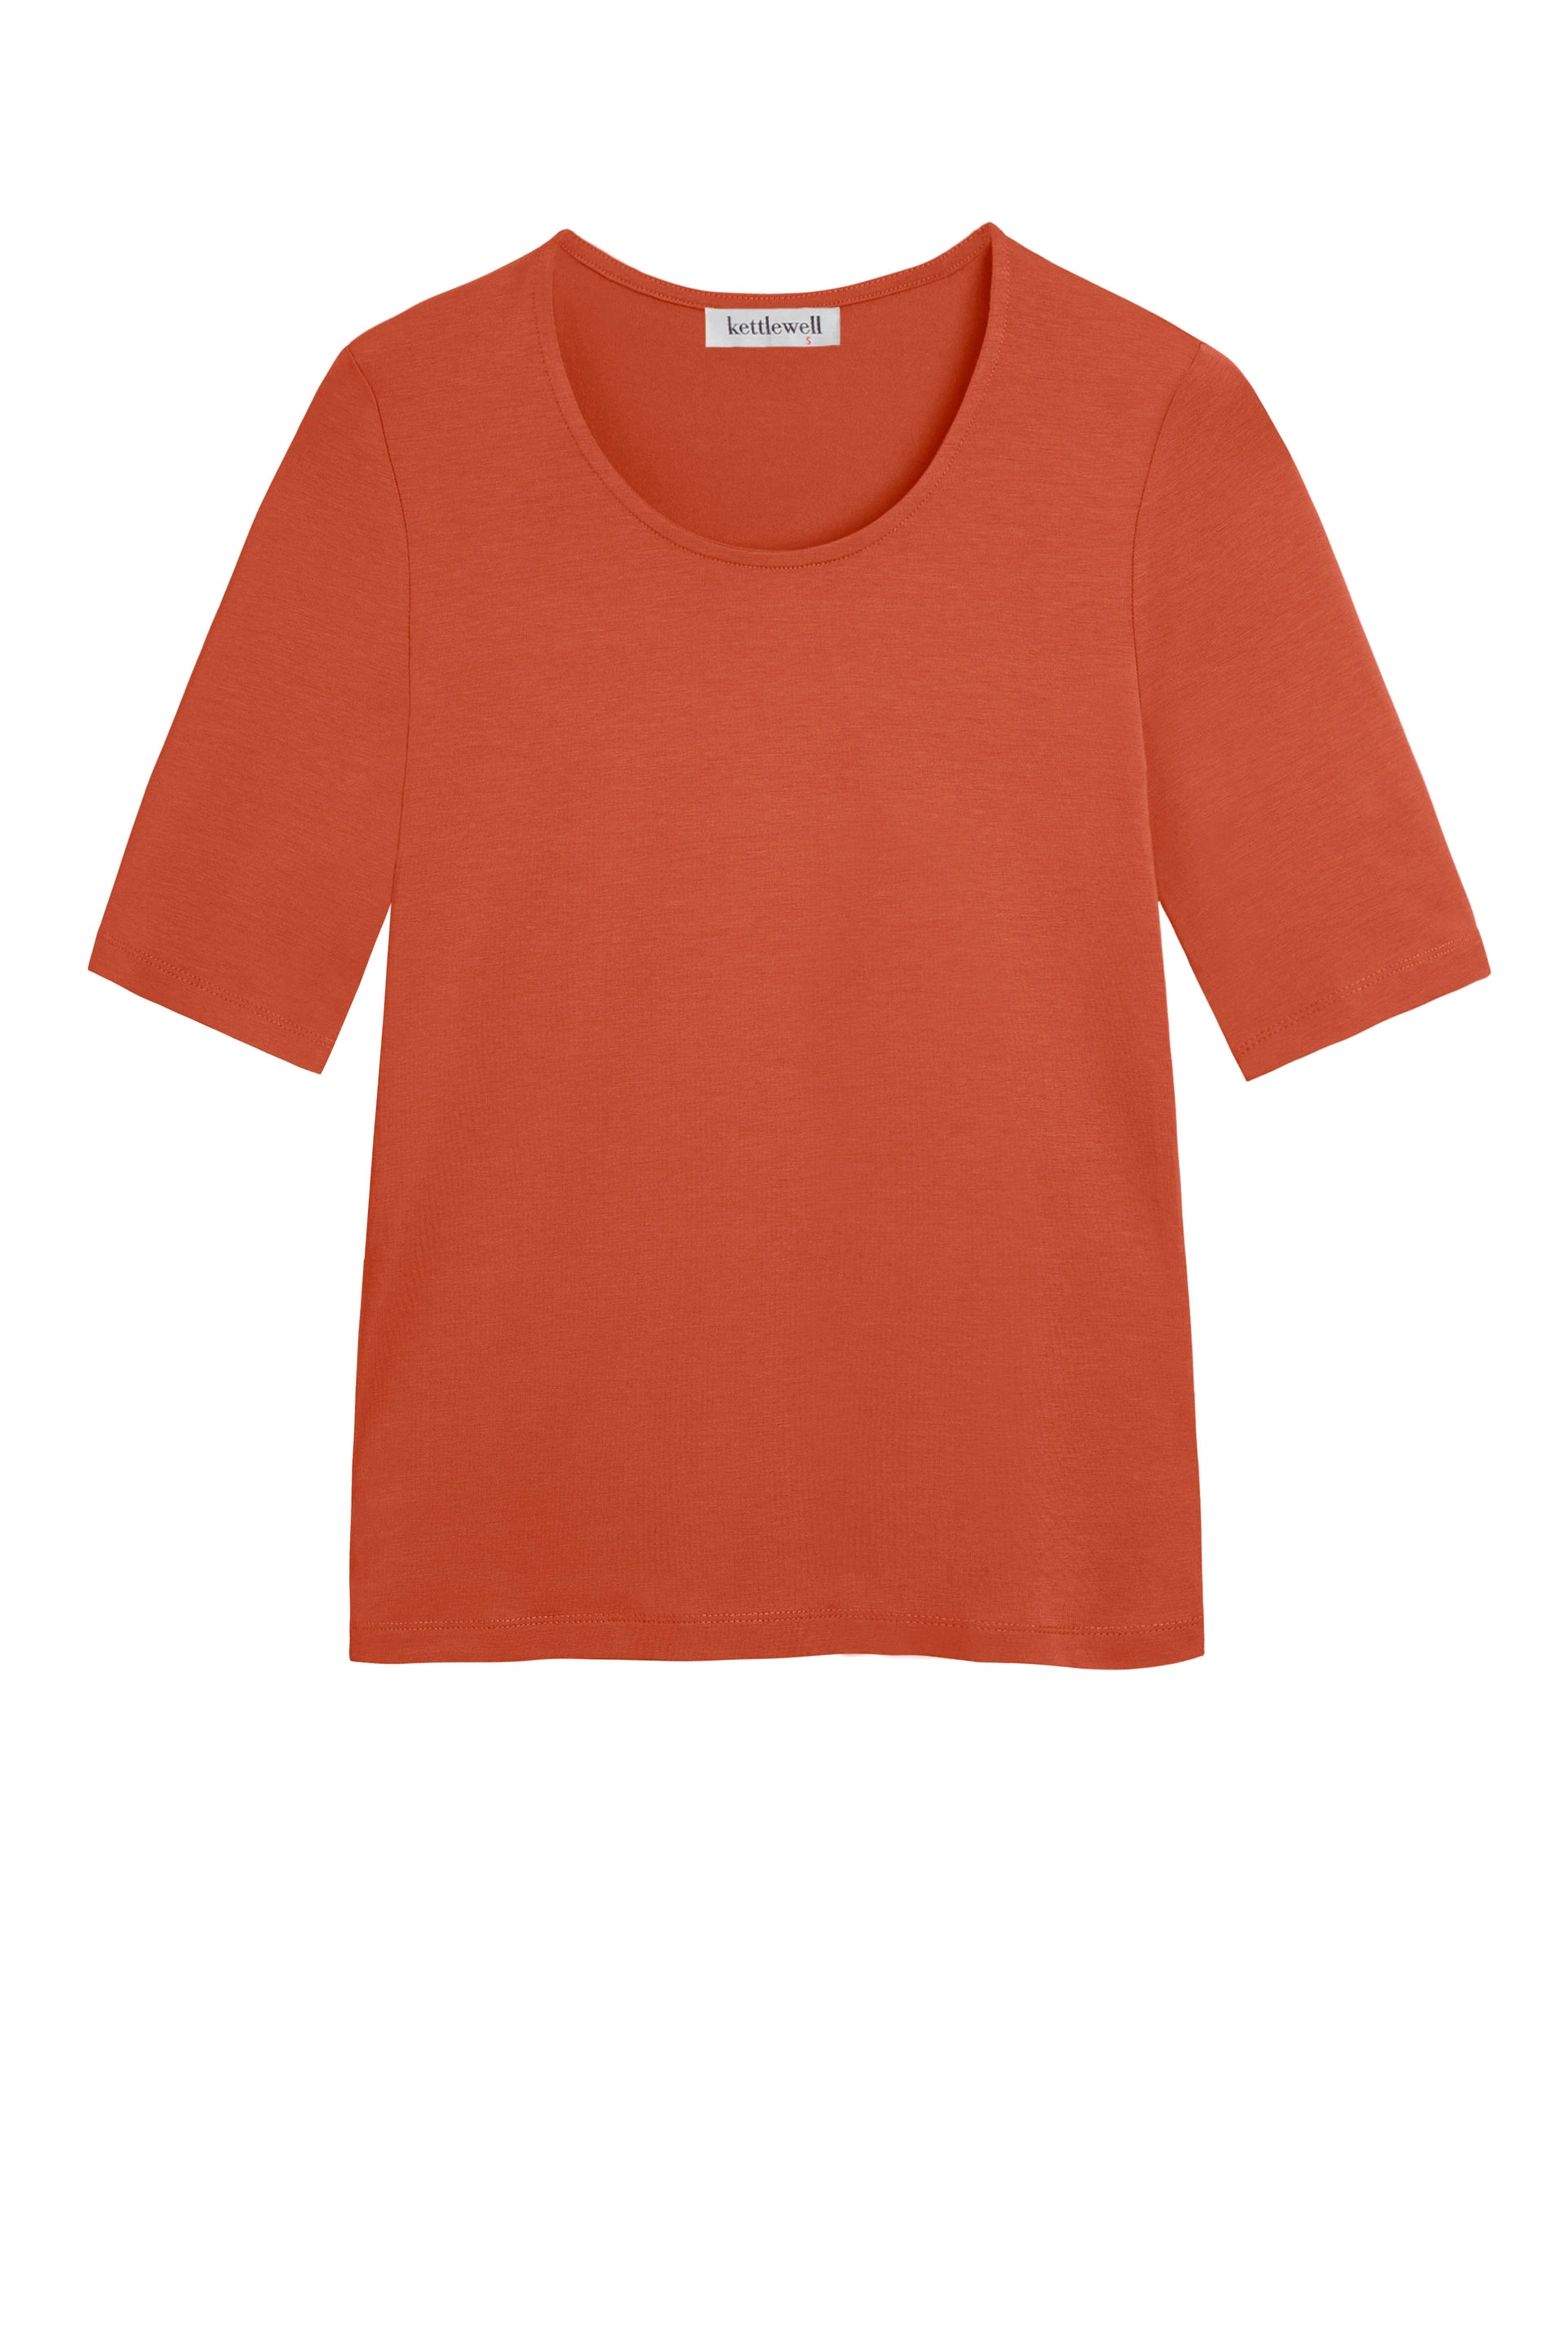 Scoop 1/2 Sleeve | Kettlewell Colours